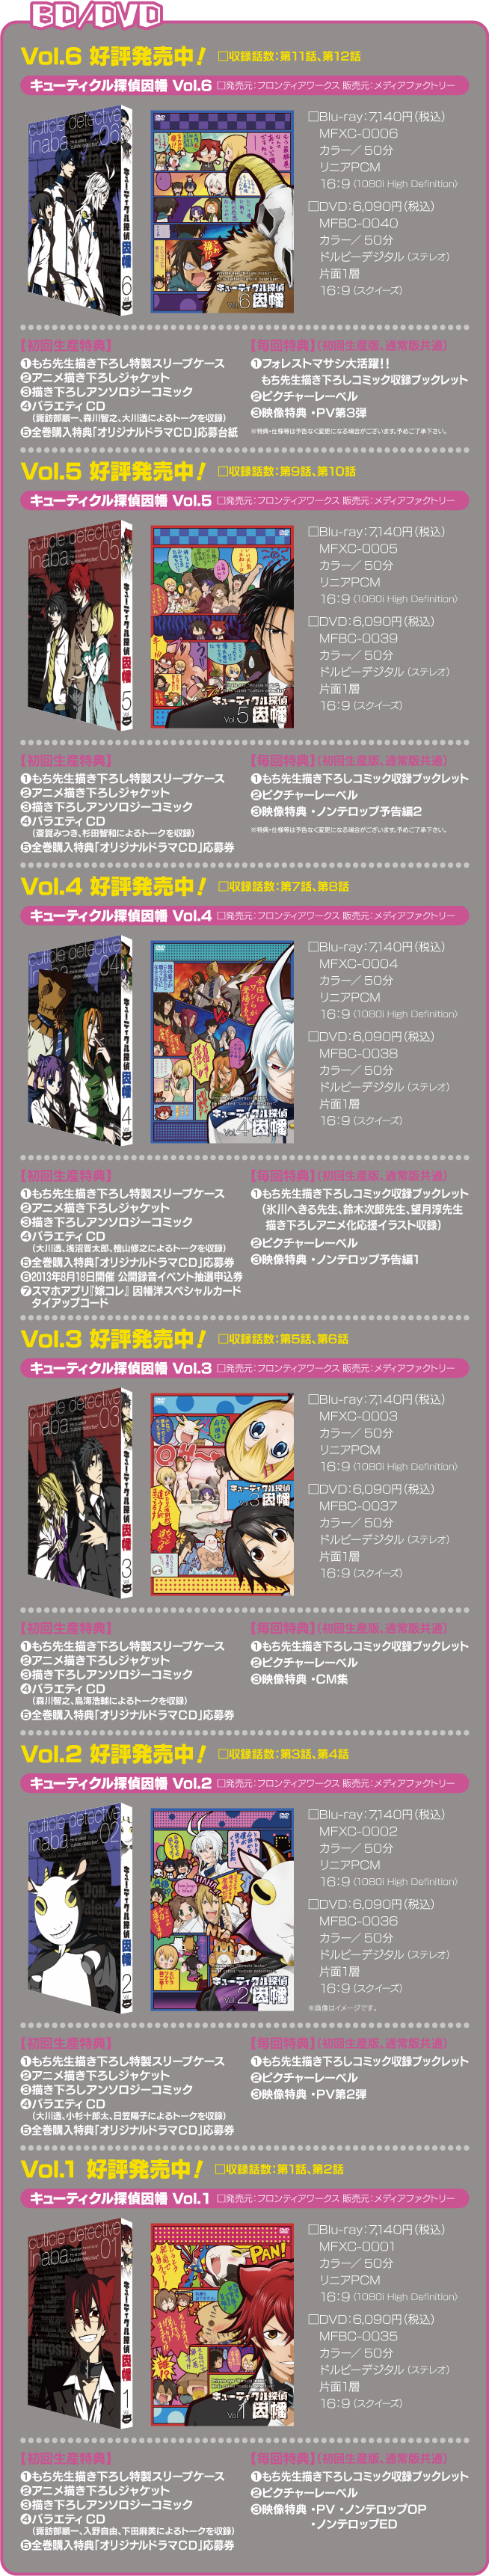 BD/DVD情報　キューティクル探偵因幡Vol.1 2013年3月27日発売！　収録話数：第１話、第２話